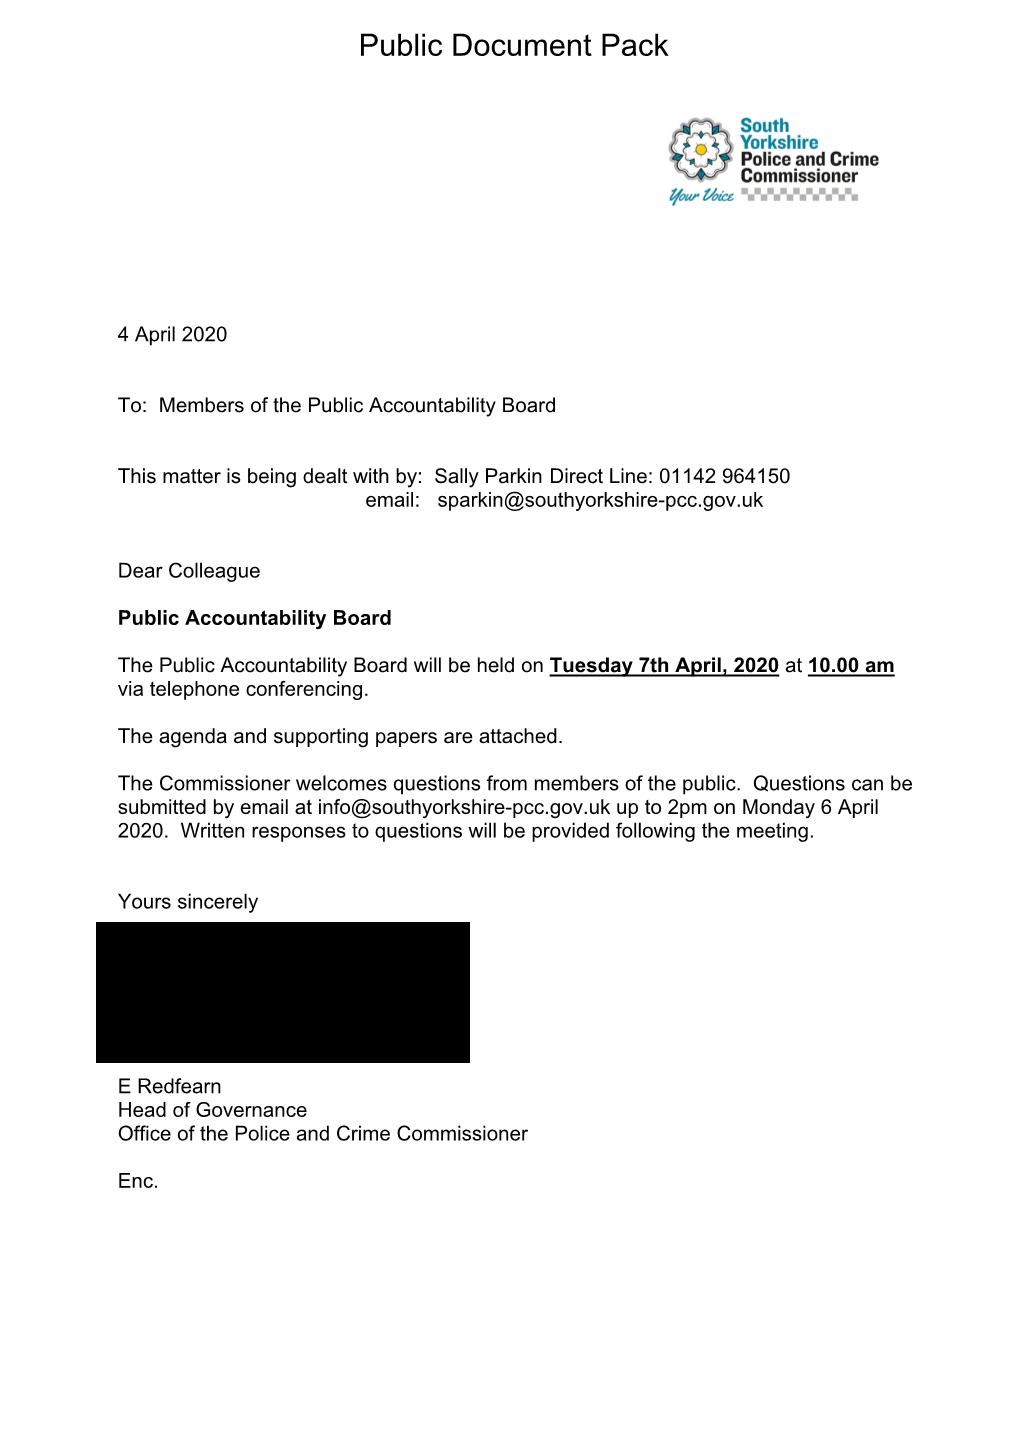 Agenda Document for Public Accountability Board, 07/04/2020